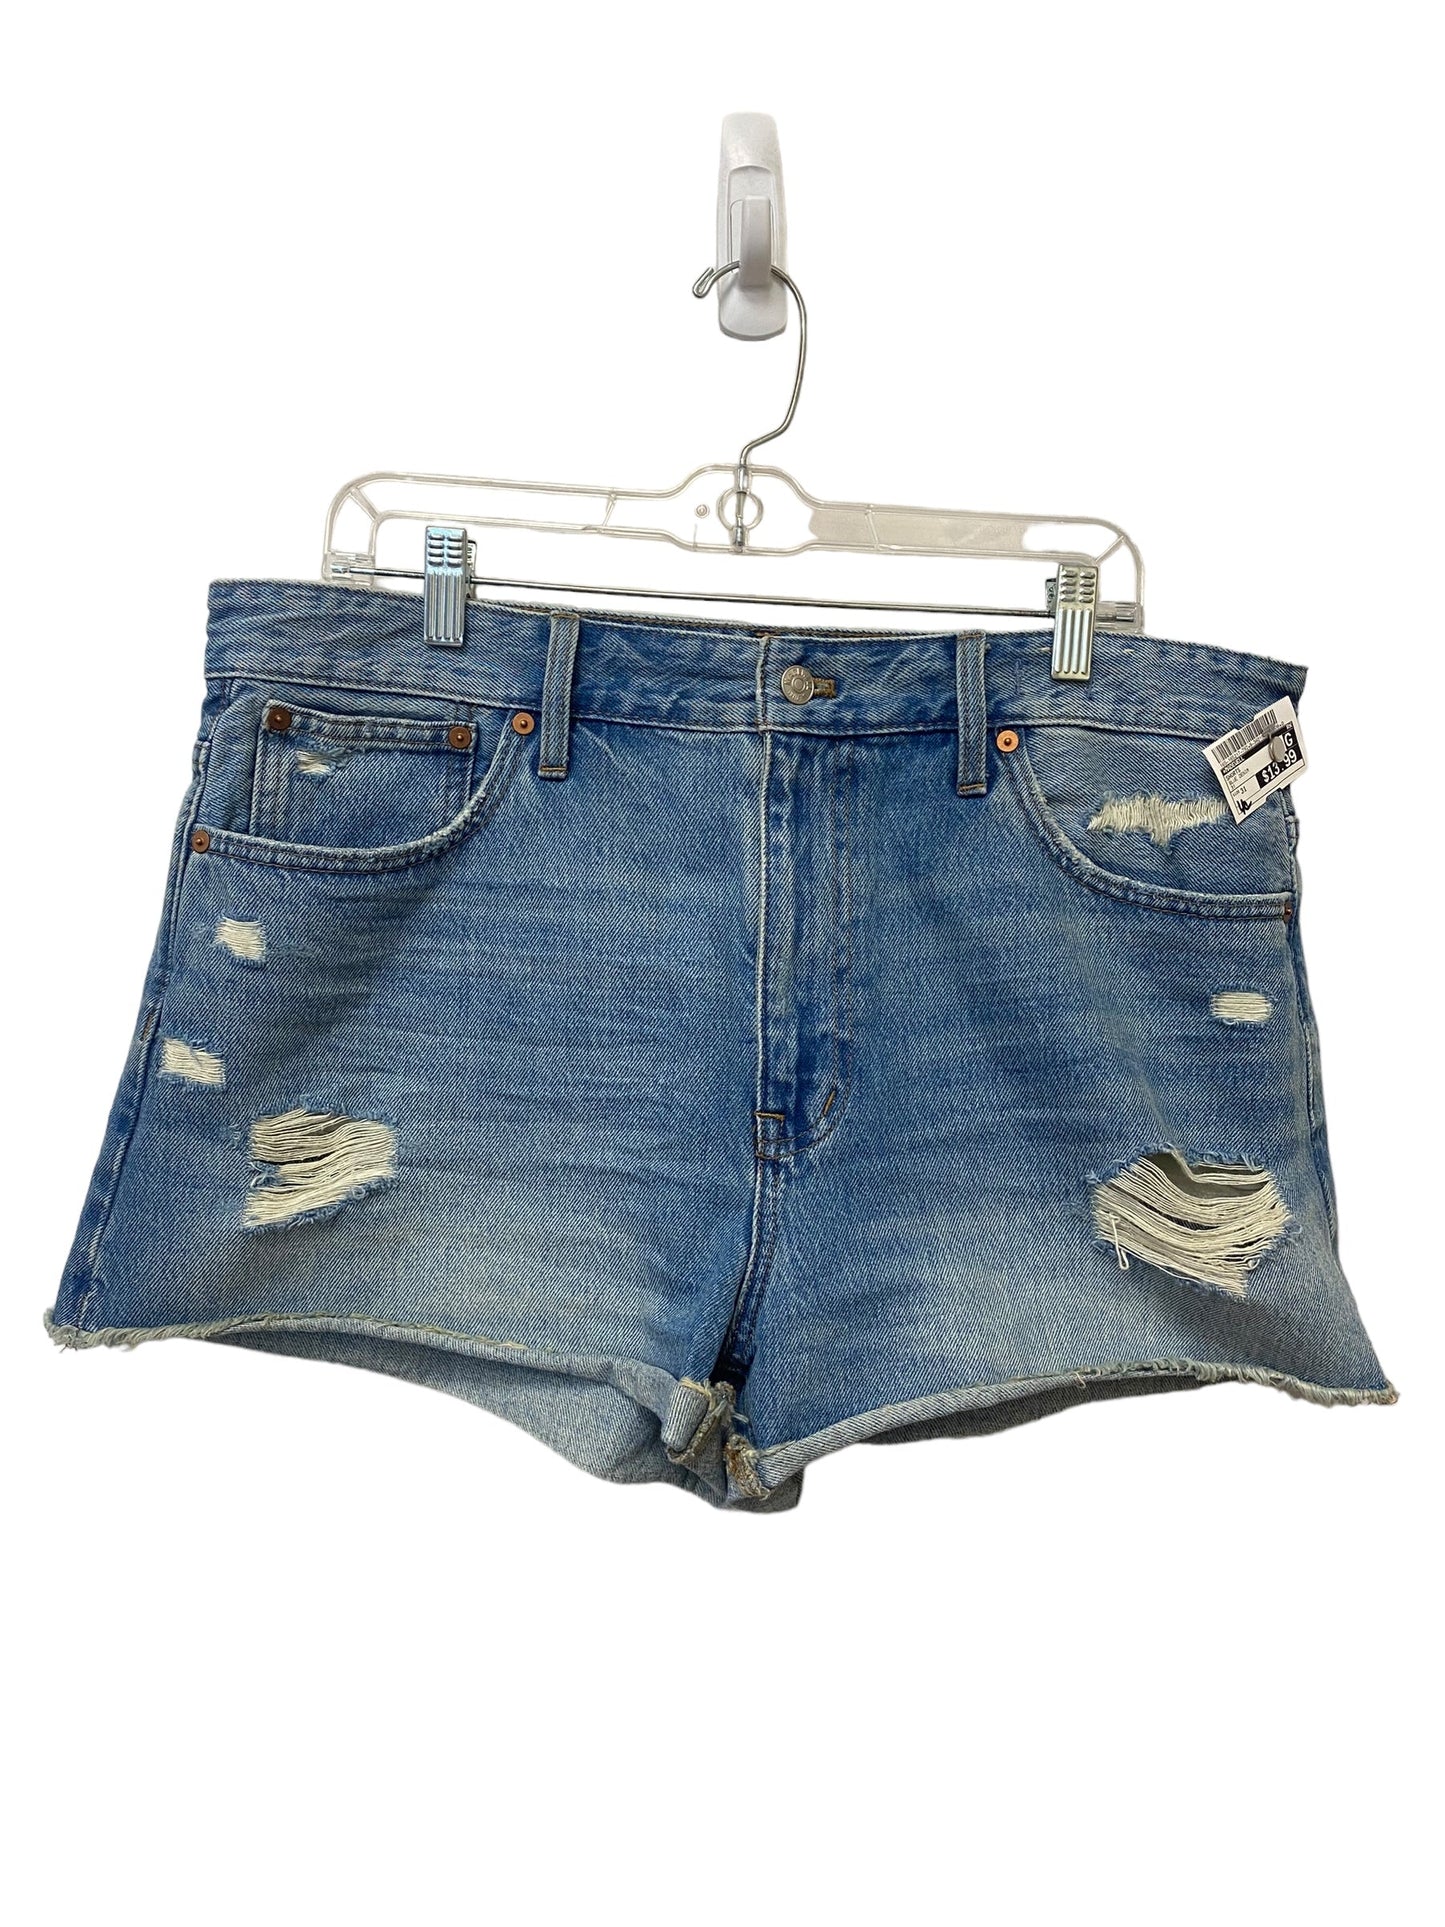 Blue Denim Shorts Madewell, Size 31